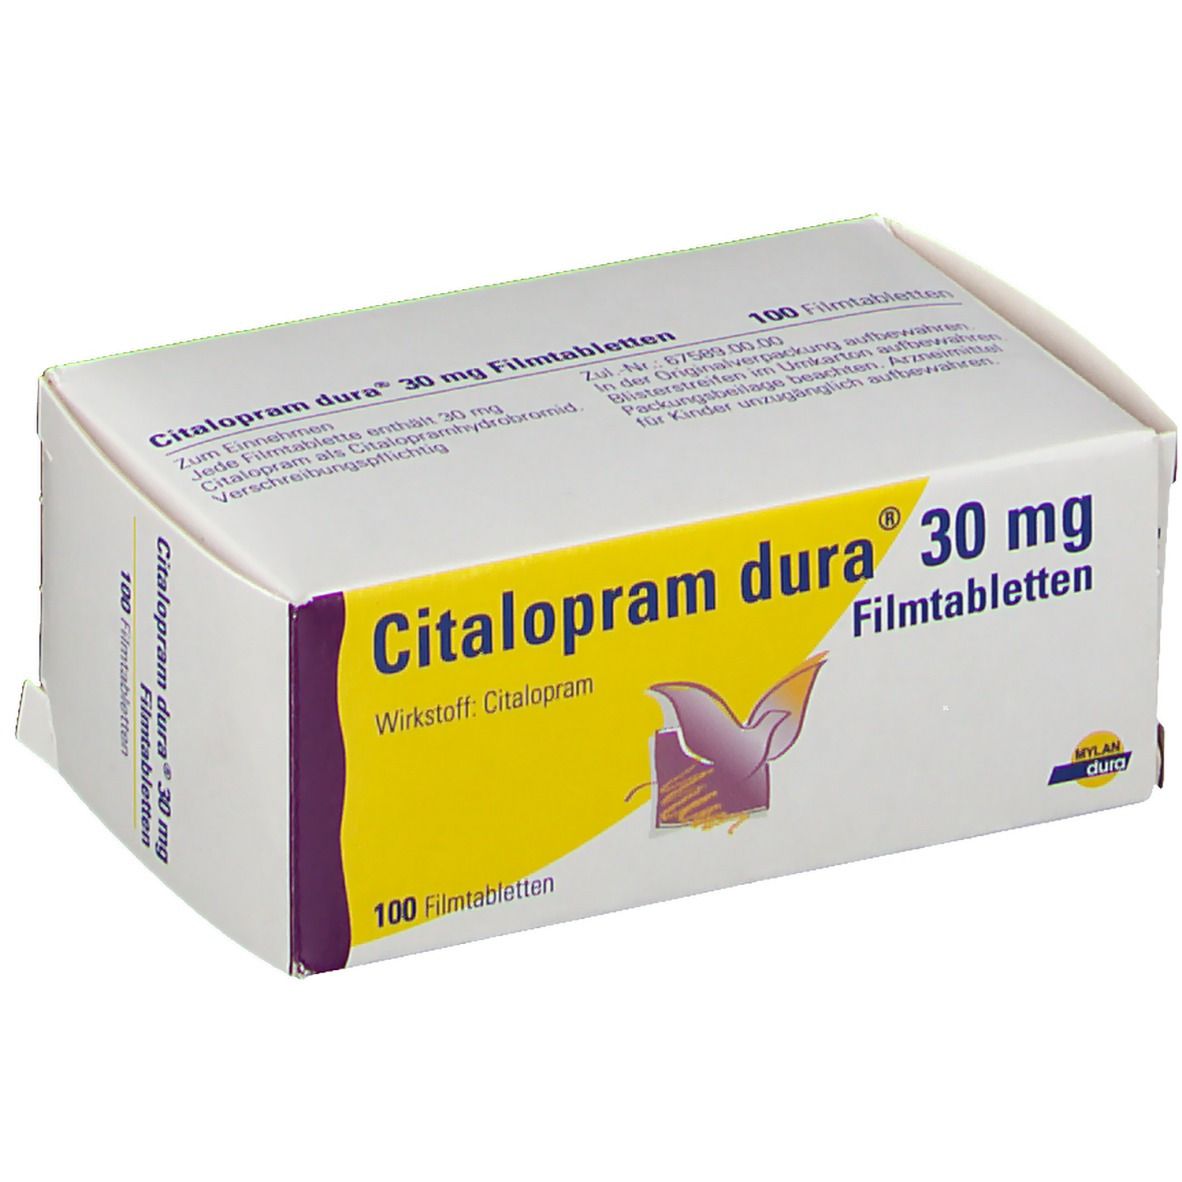 Citalopram dura® 30 mg